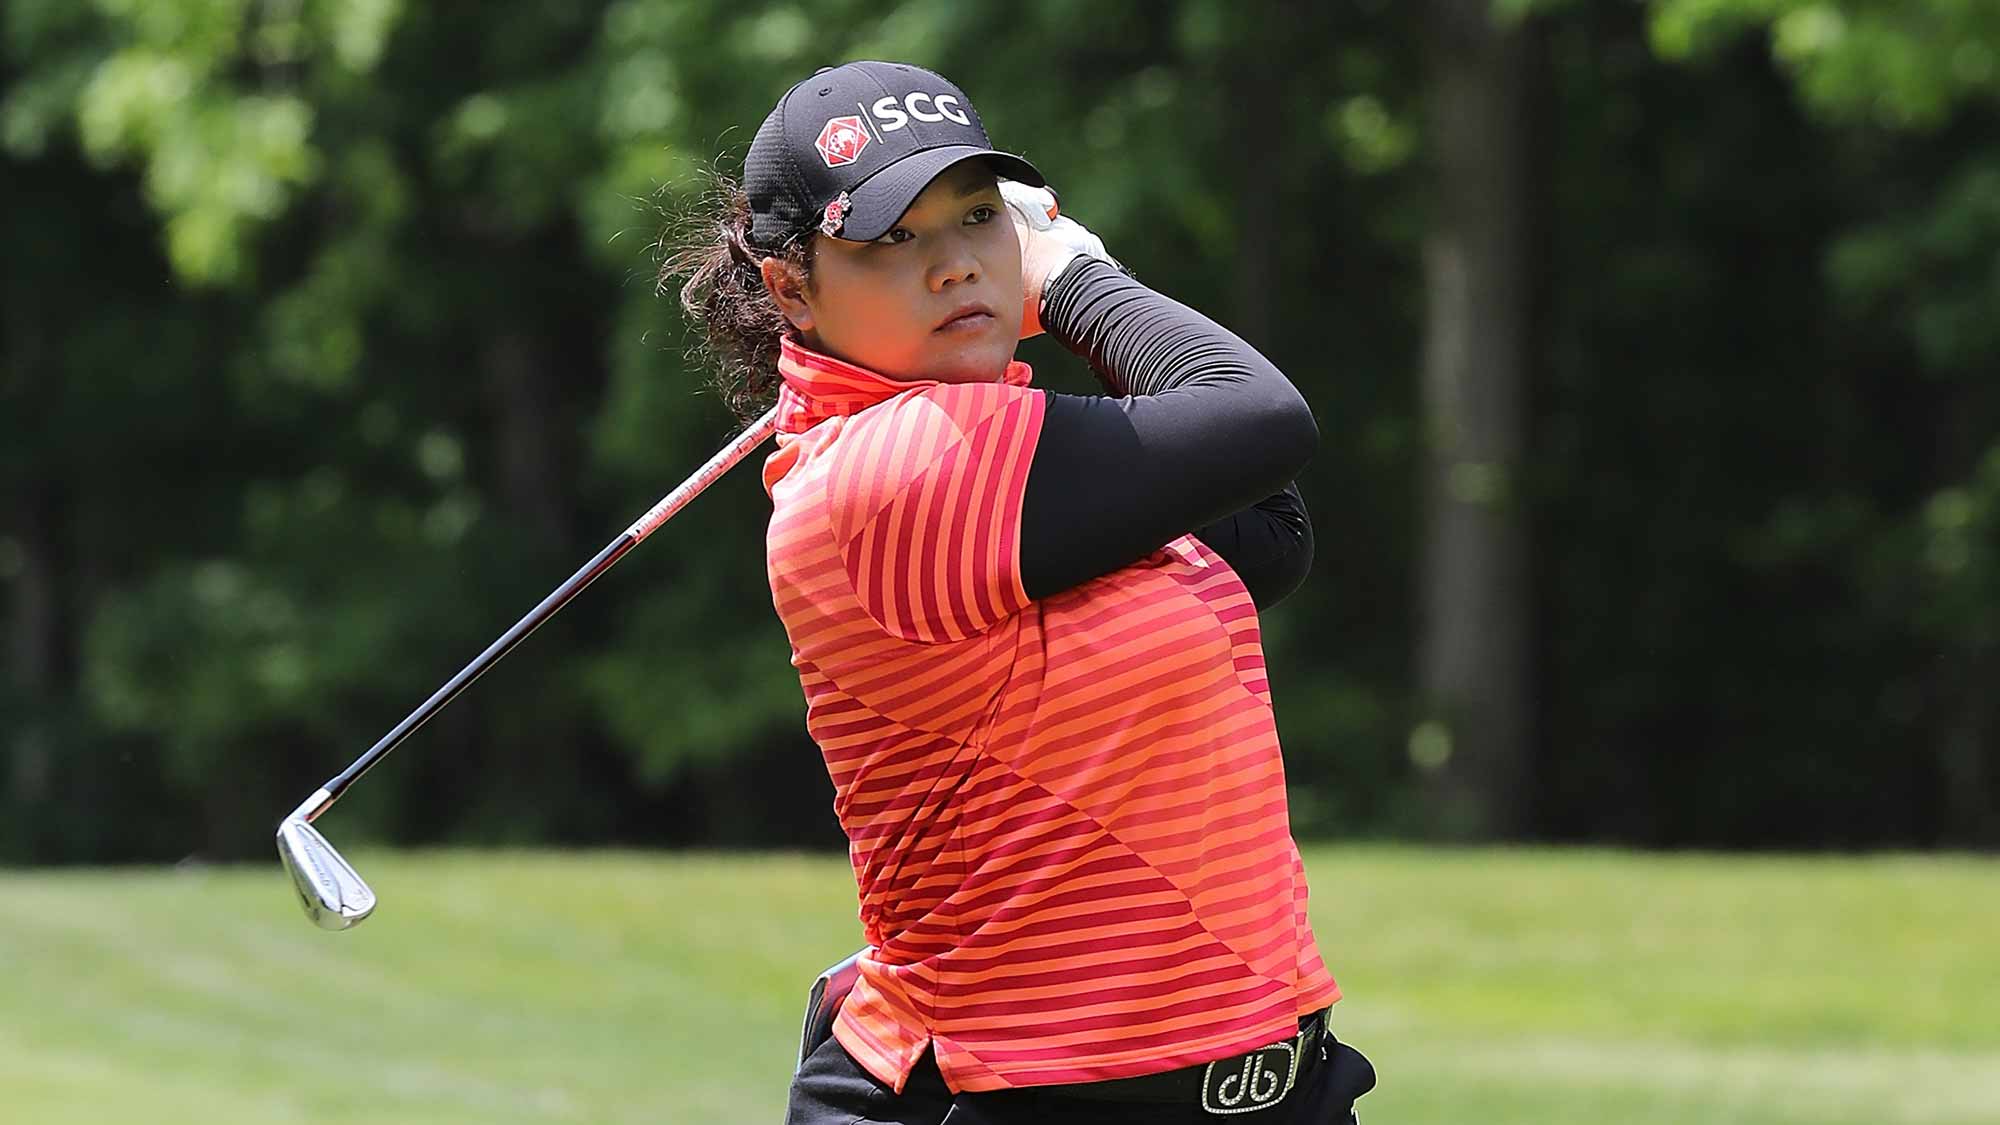 Ariya Jutanugarn from Thailand hits her approach shot to the third green during the third round of the LPGA Volvik Championship